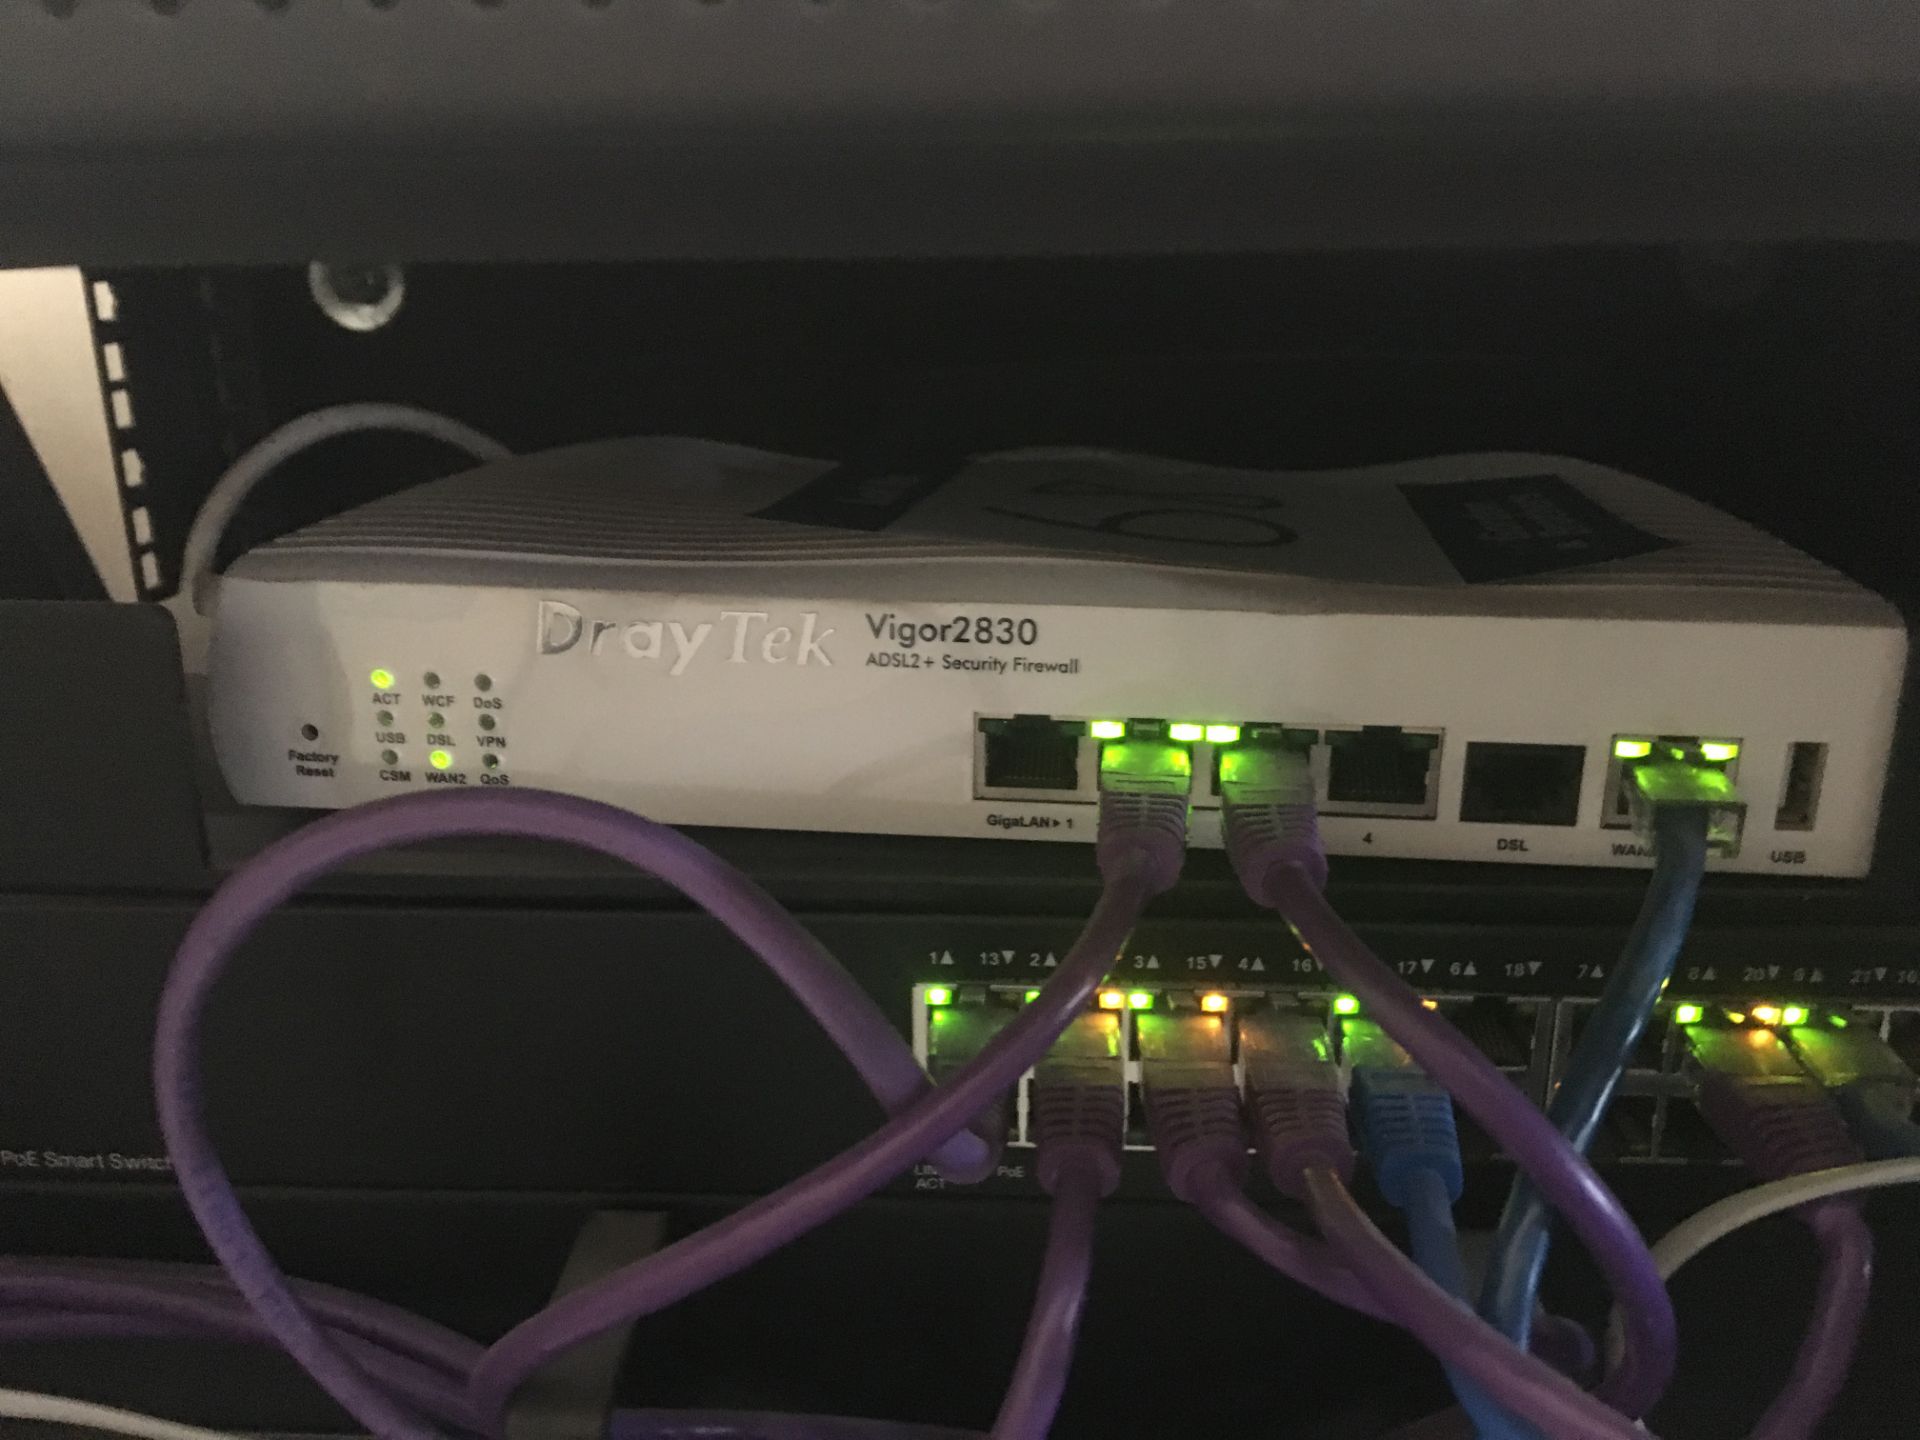 Draytek Vigor 2830 ADSL 2+ security firewall - Image 2 of 2